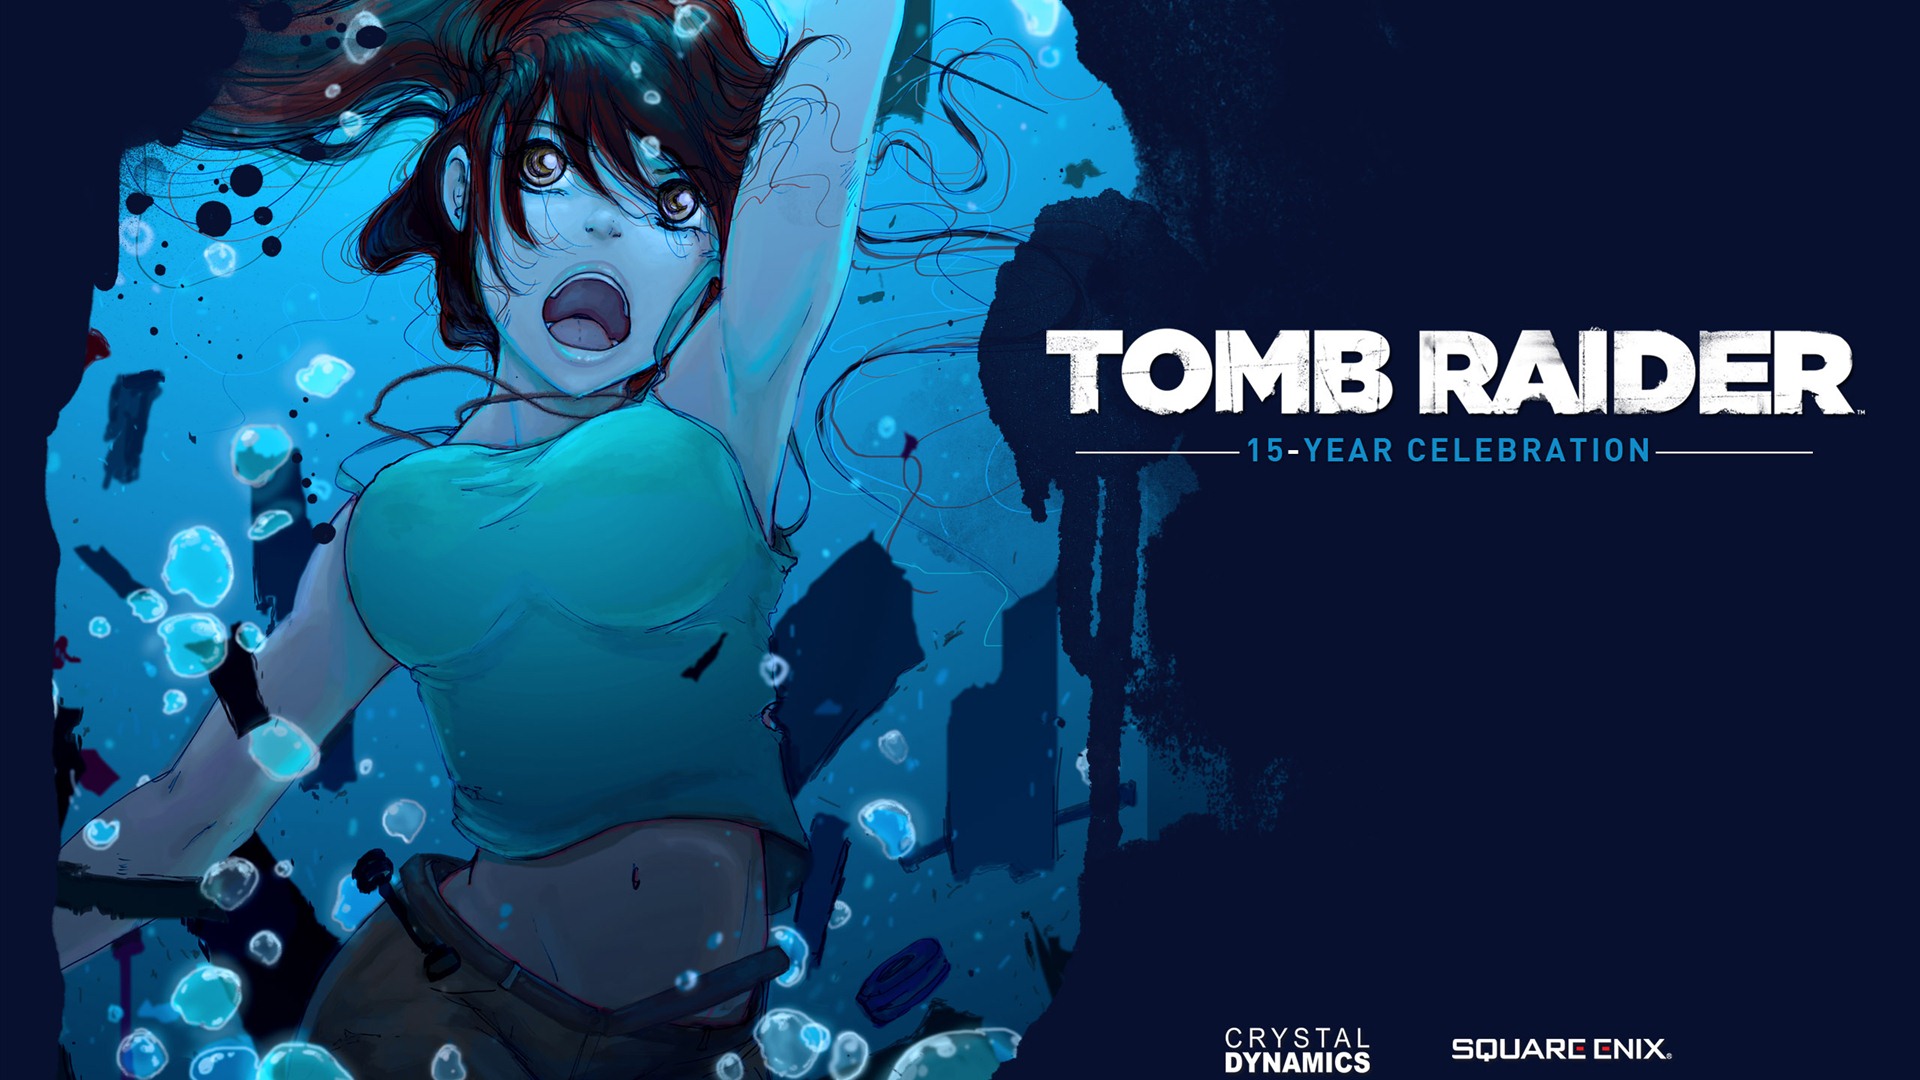 Tomb Raider 15-Year Celebration 古墓麗影15週年紀念版高清壁紙 #9 - 1920x1080